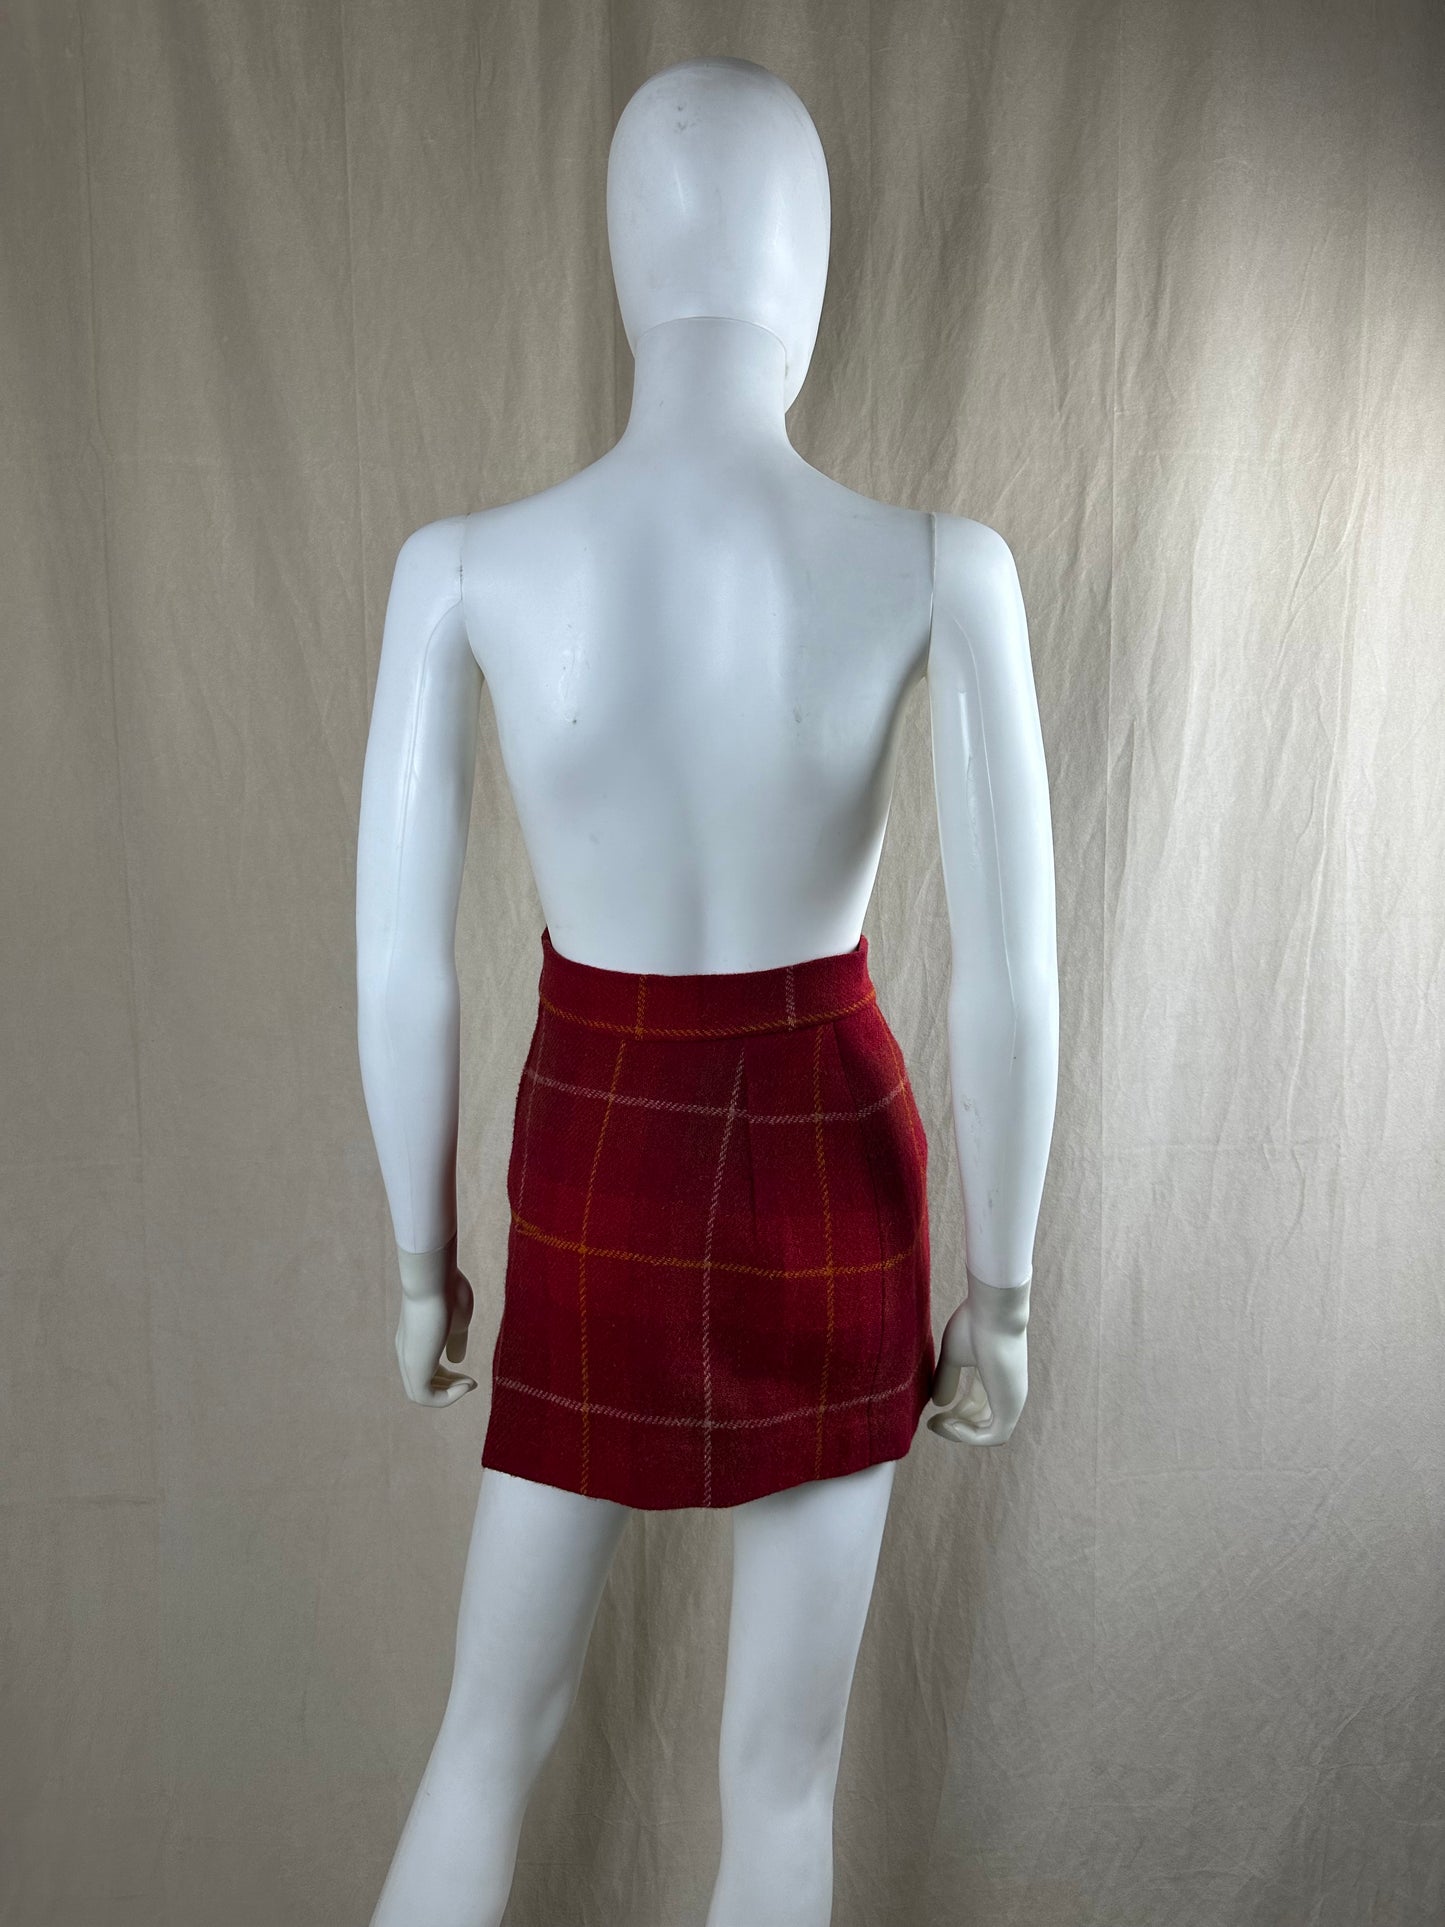 Vivienne Westwood FW 1991 Jacket + Skirt (2) Set